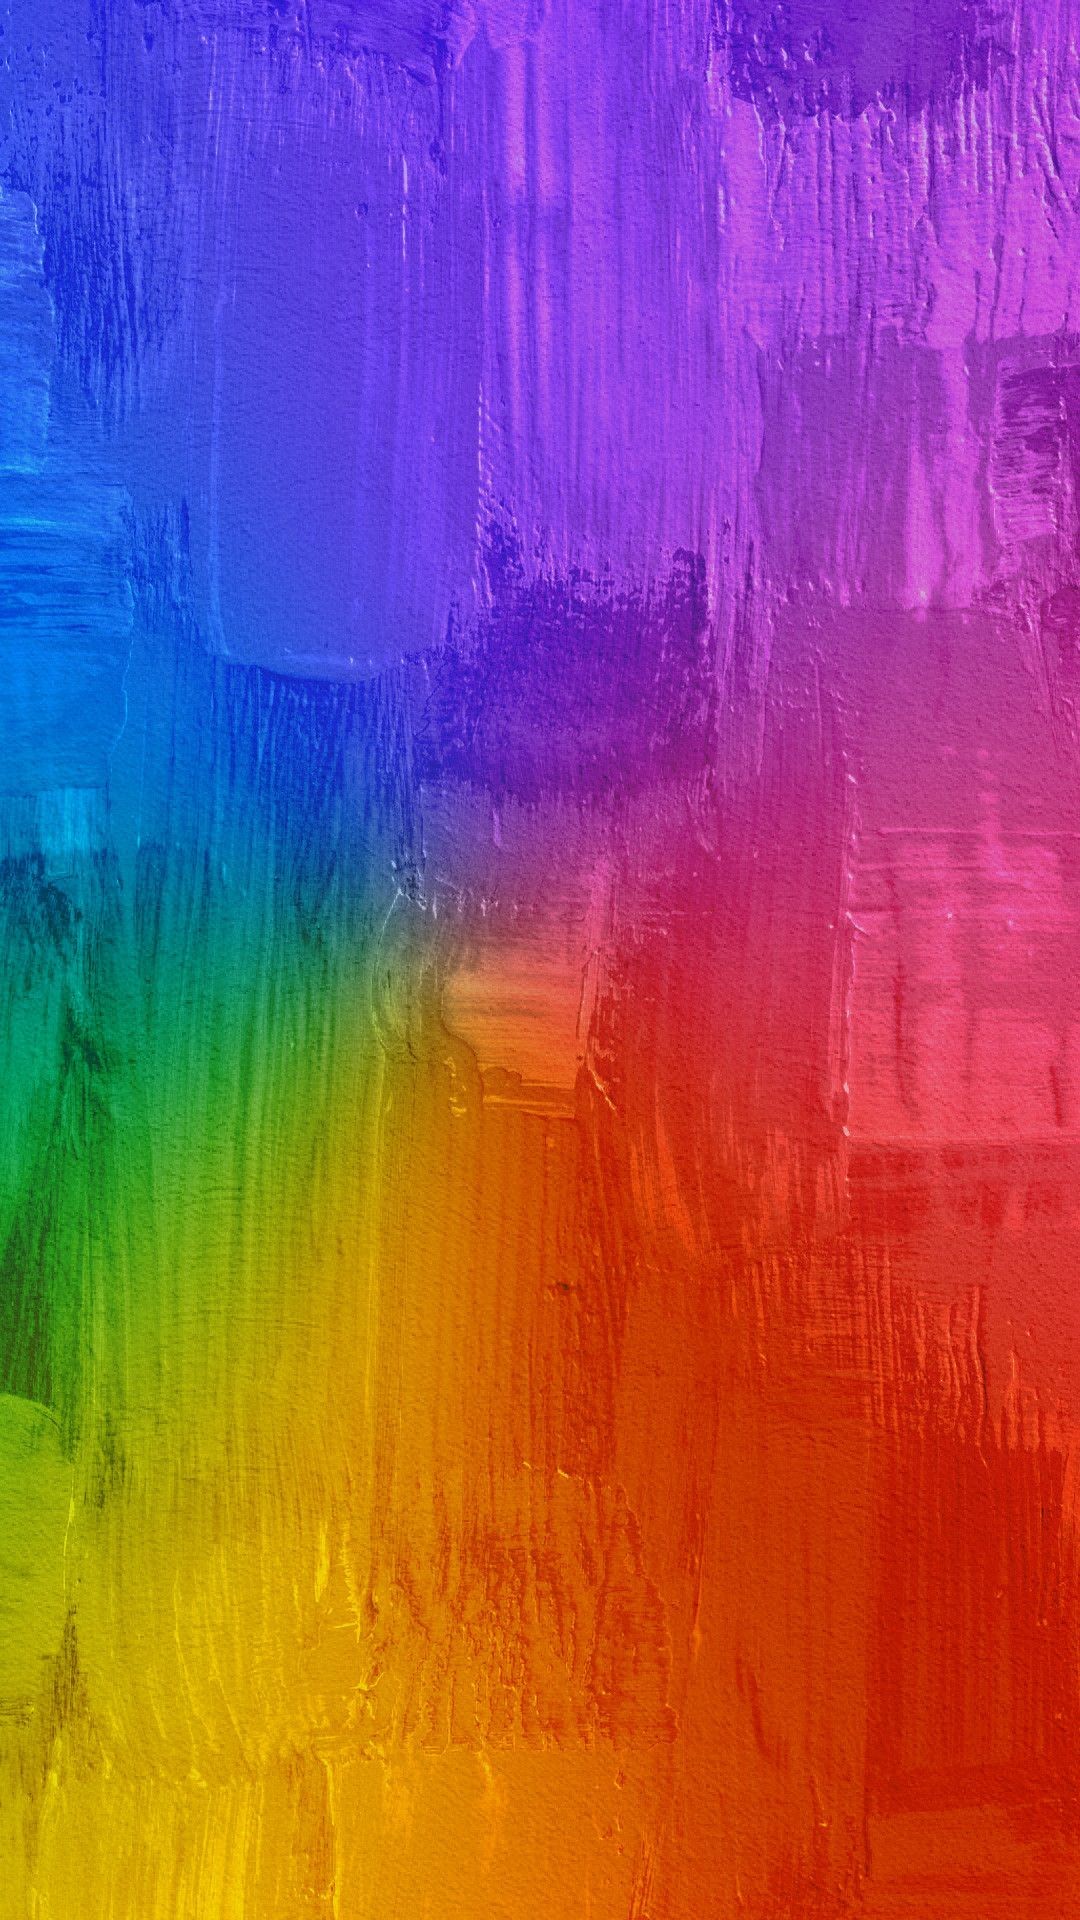 1080x1920 Fondo de colores arco iris | Rainbow wallpaper - #backgrounds #colores  #colors